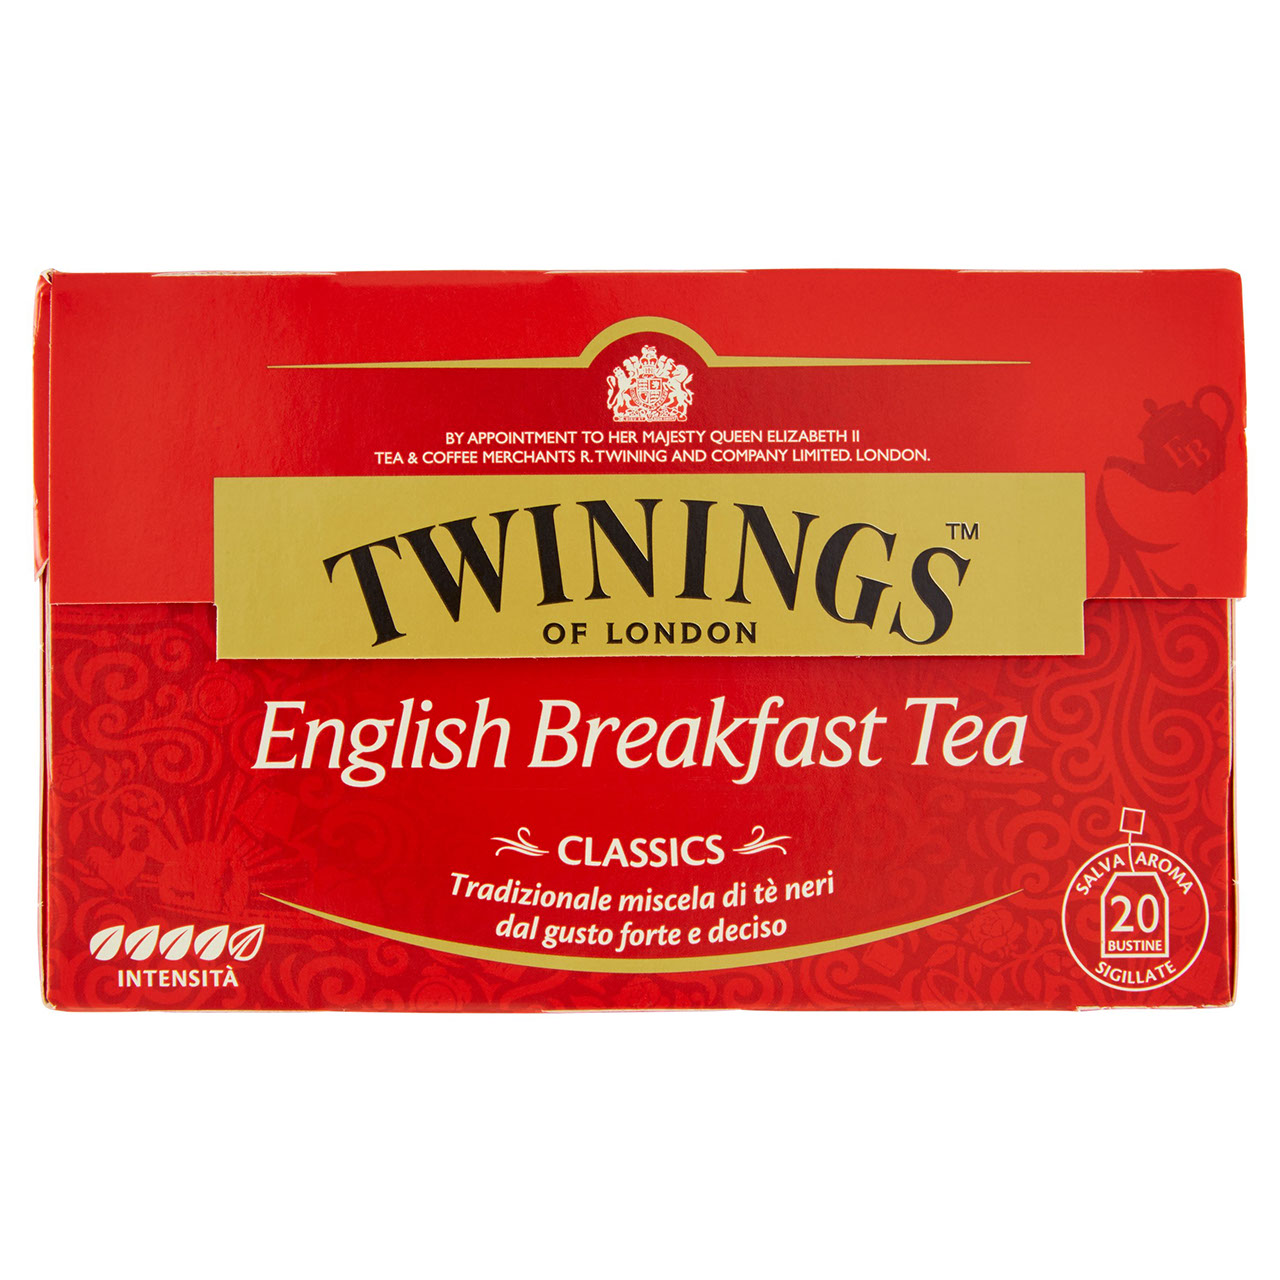 Twinings Classics English Breakfast Tea 40 g